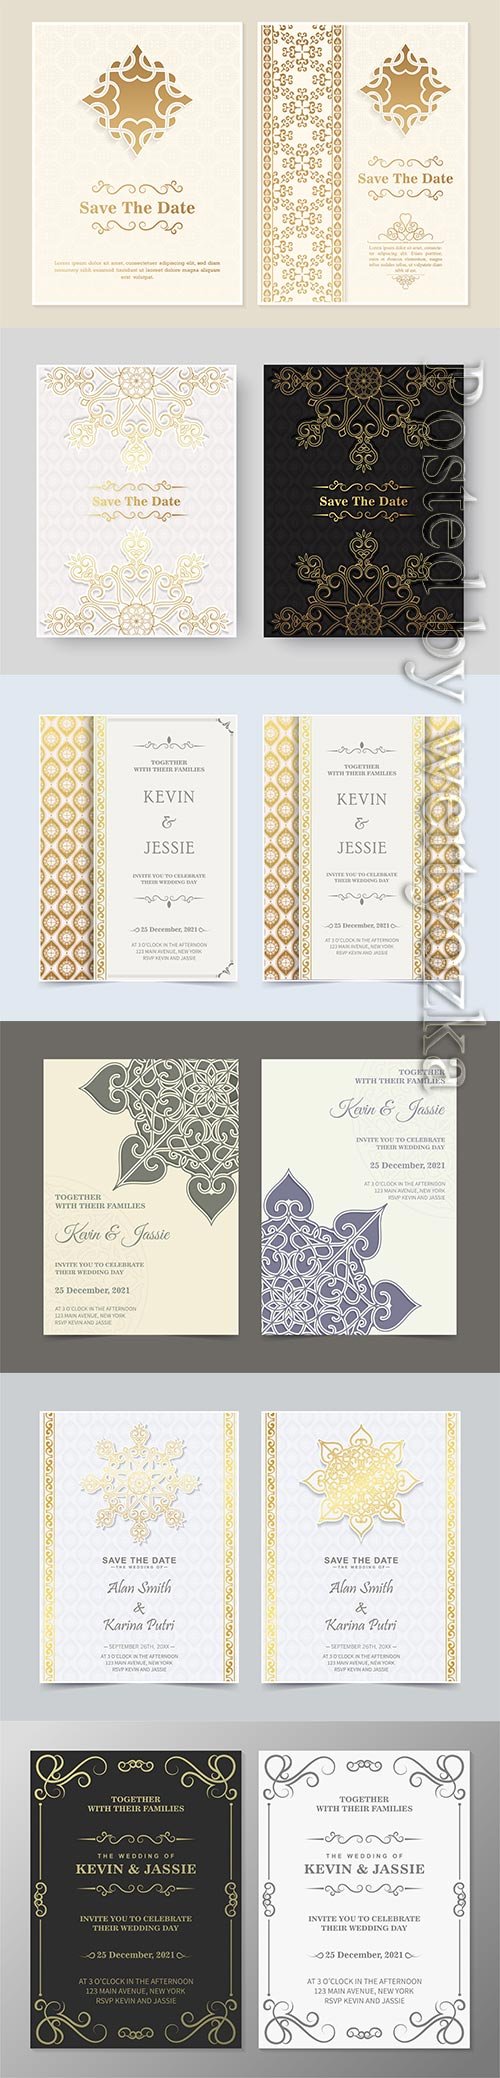 Luxury wedding vector invitation with border ornaments